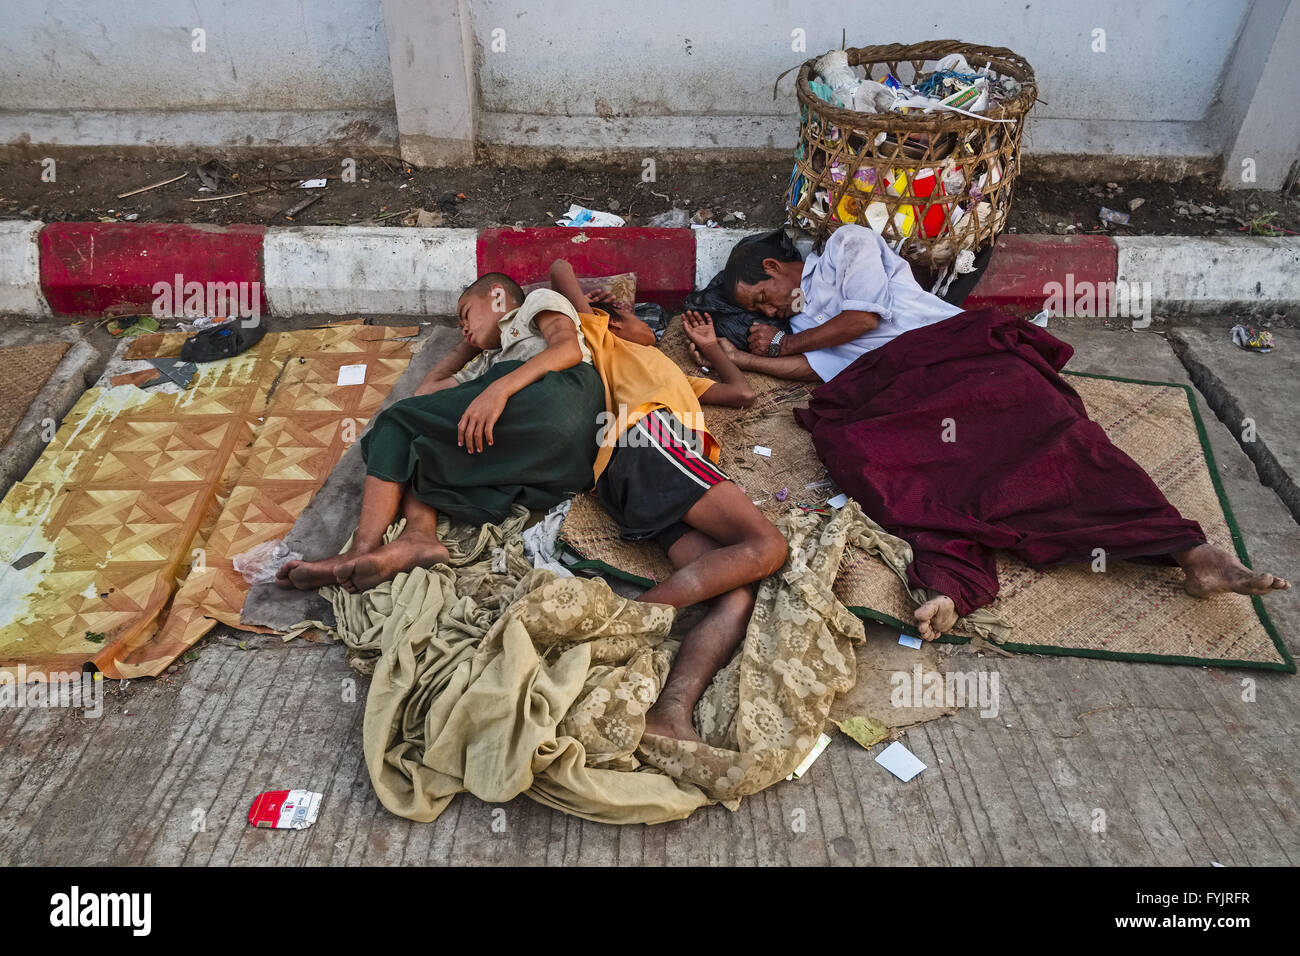 Homeless people at the streets, Yangon, Myanmar Stock Photo